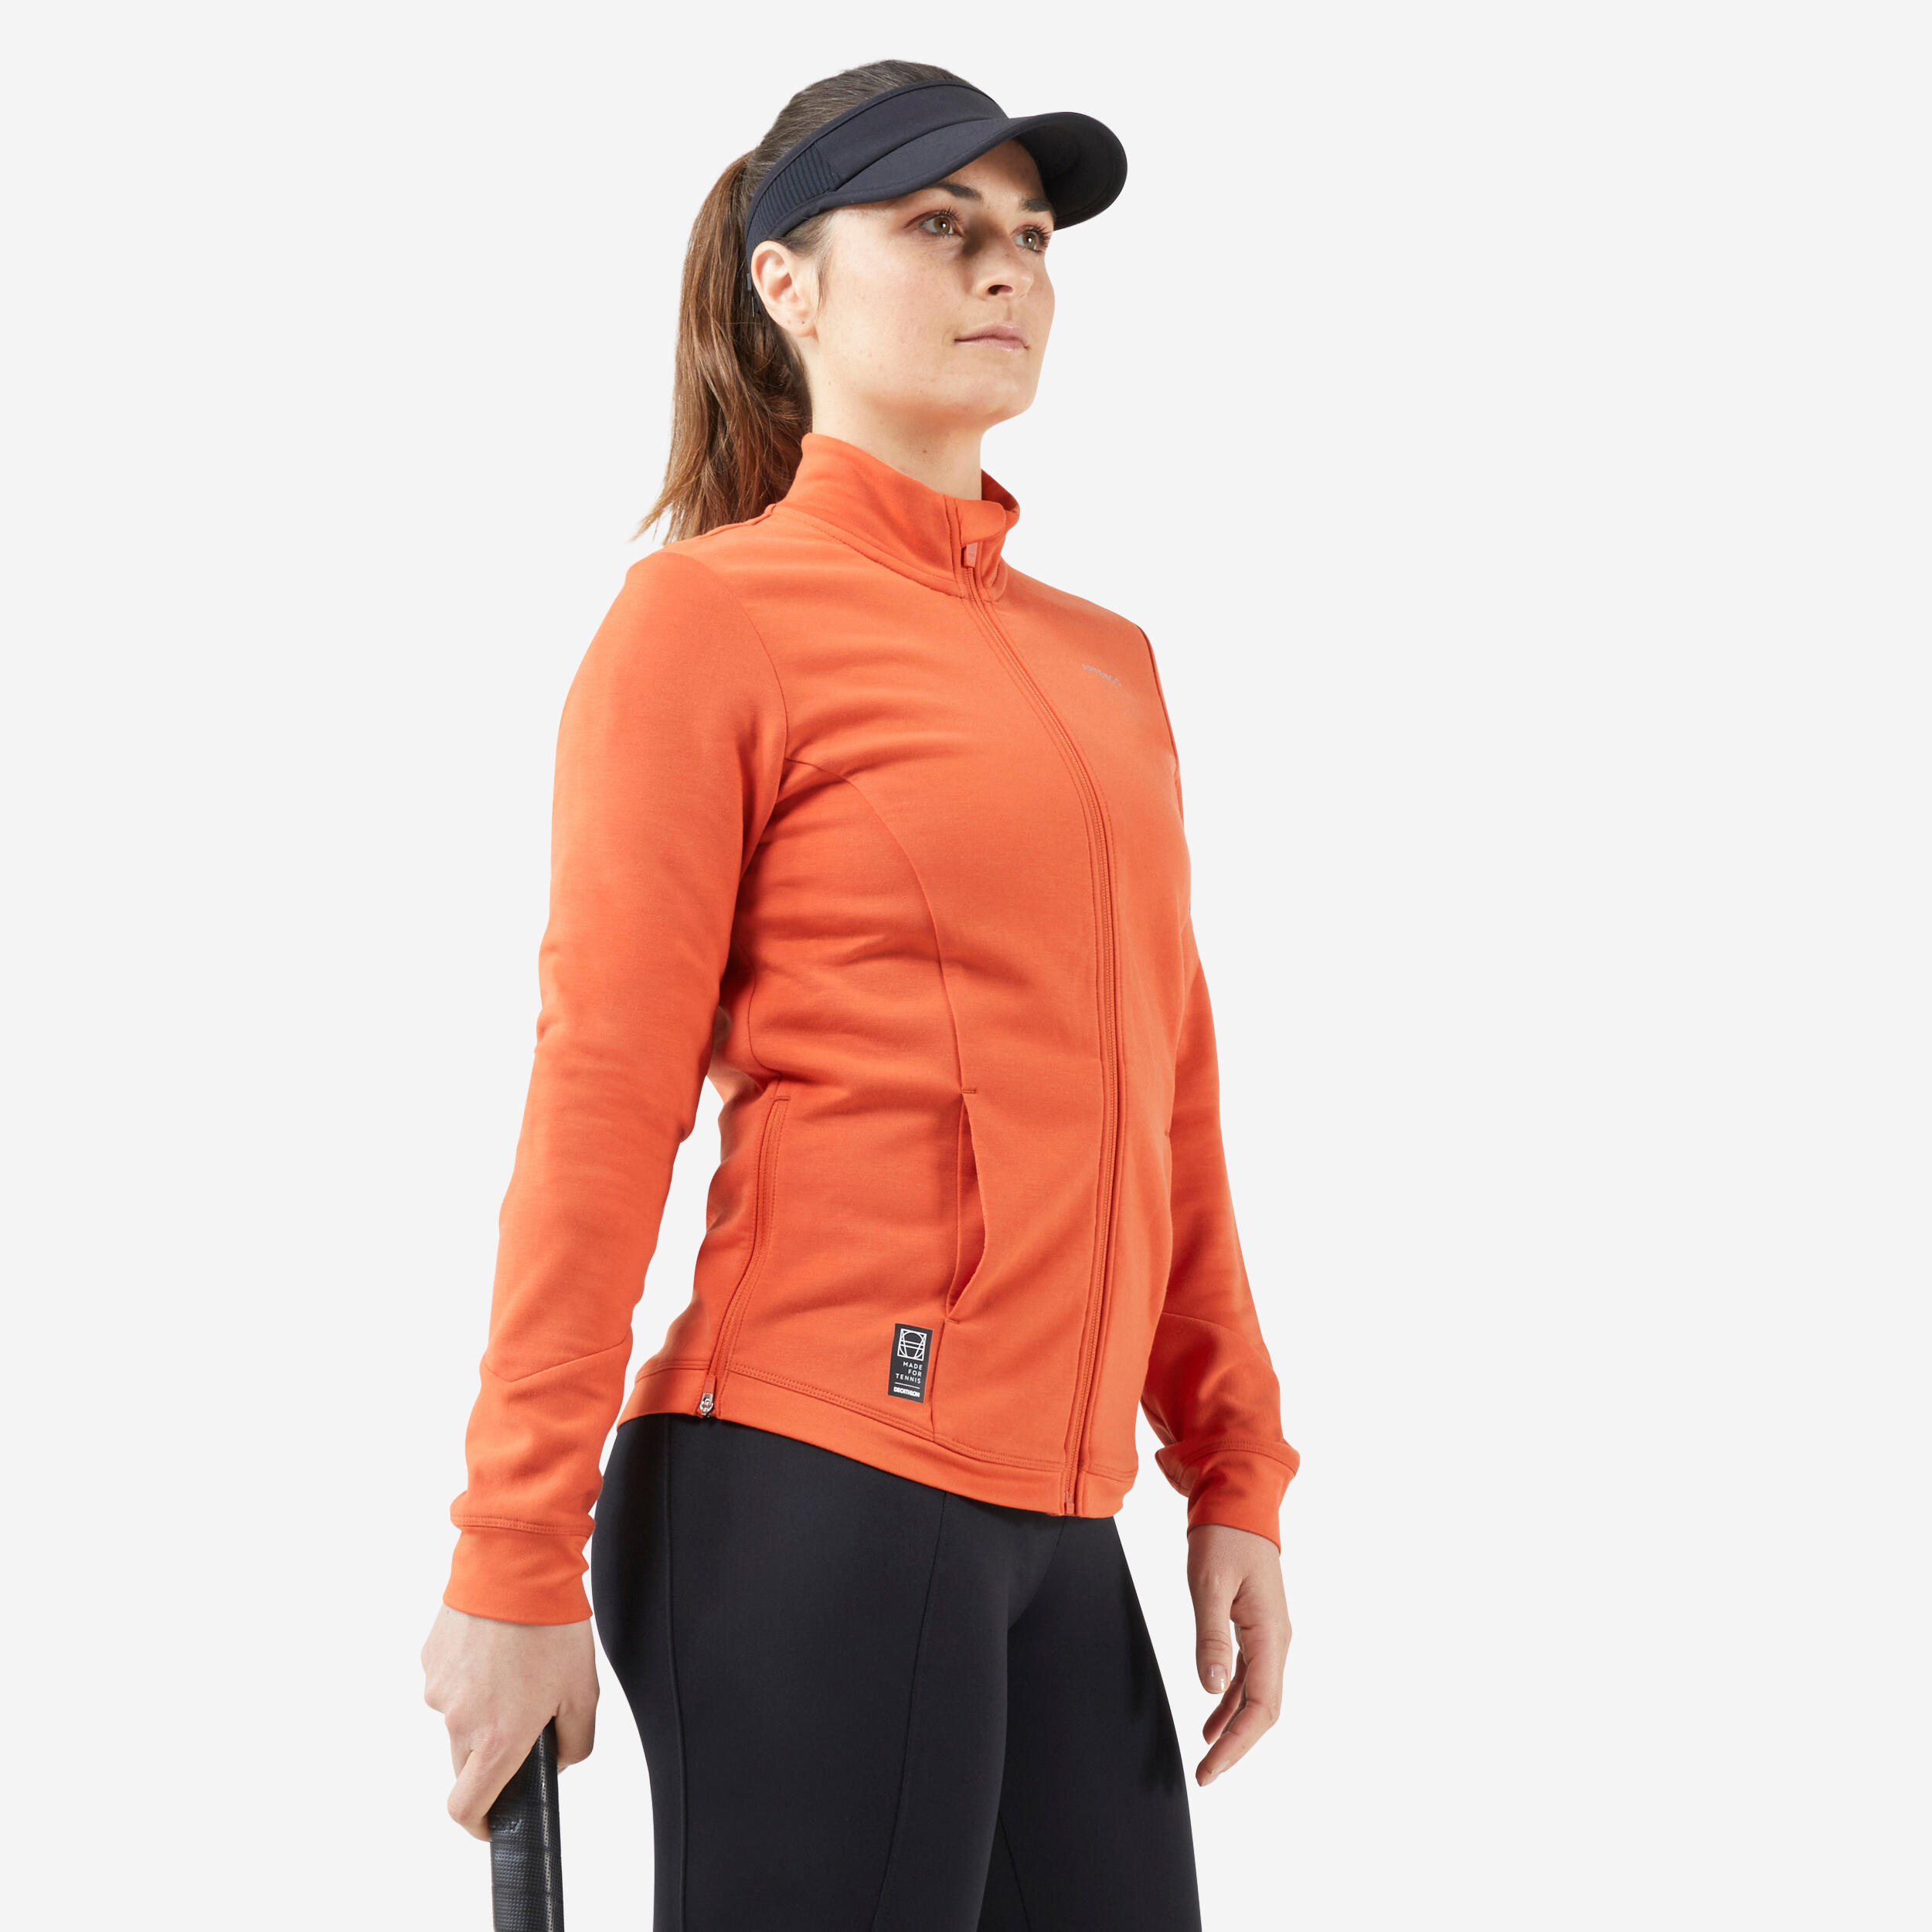 veste tennis dry soft femme - dry 900 orange - artengo